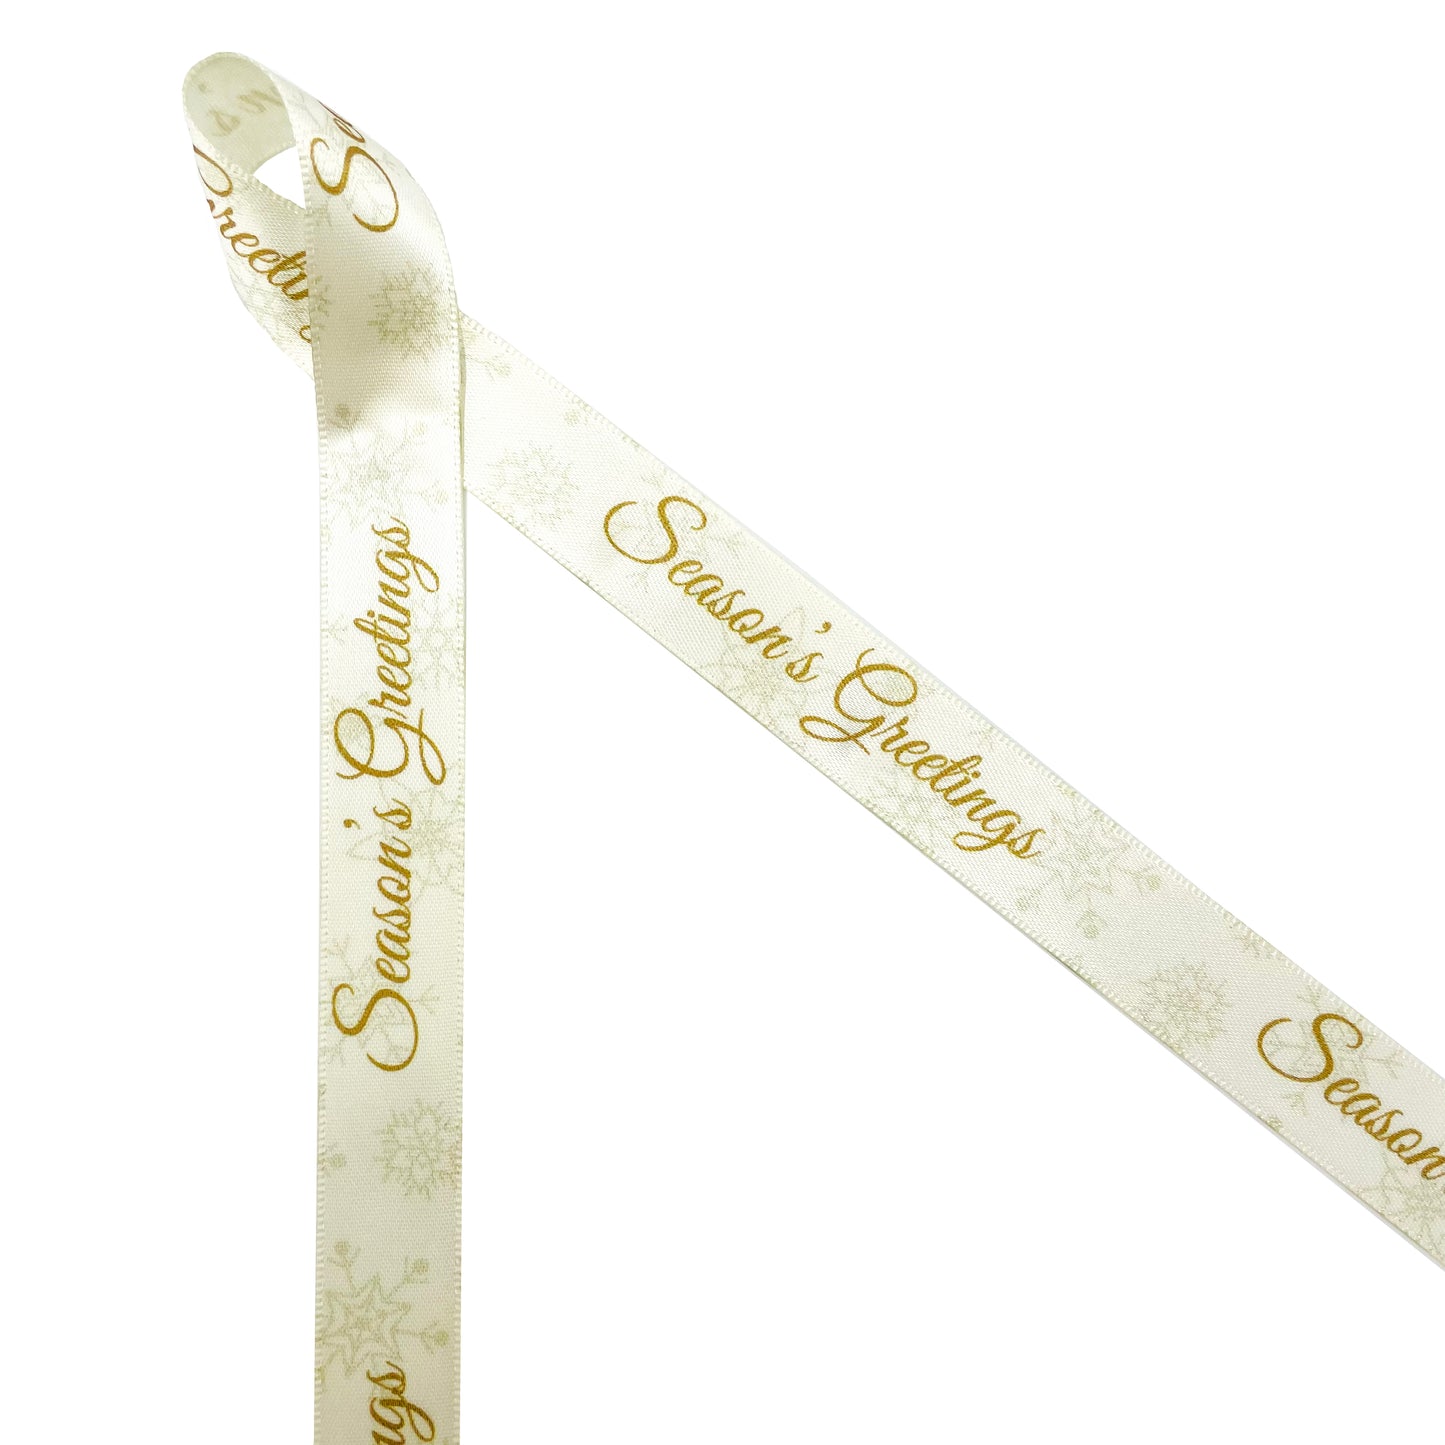 Season's Greetings Ribbon in Gold on 5/8" Antique White single face satin